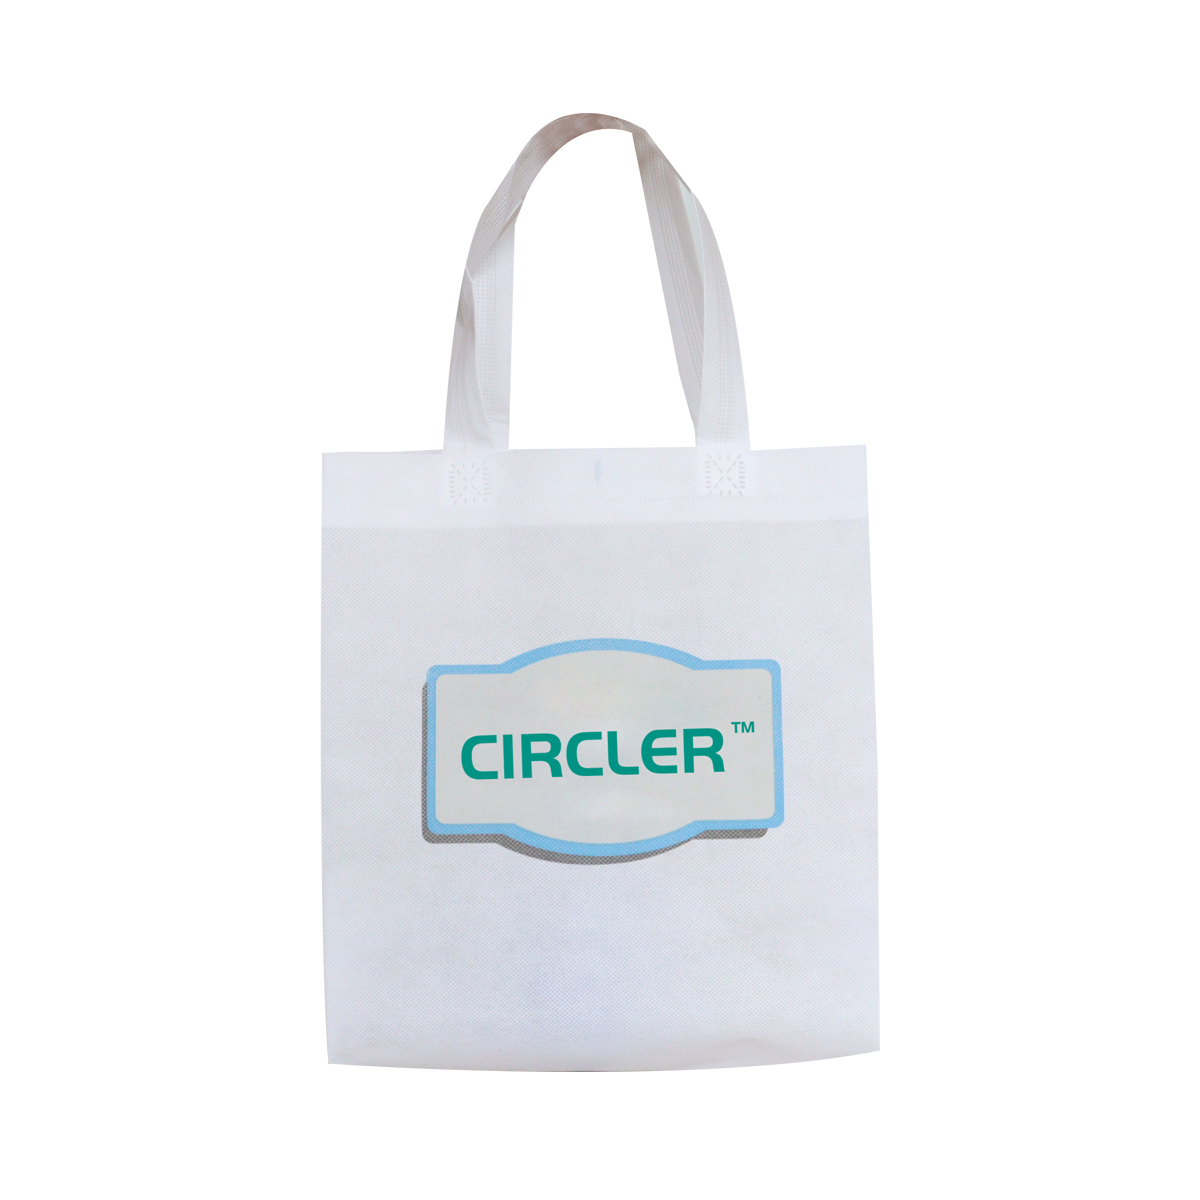 Reusable bare cloth three-dimensional bag   SK0010090A11ABWN/SK0010090B11ABWN